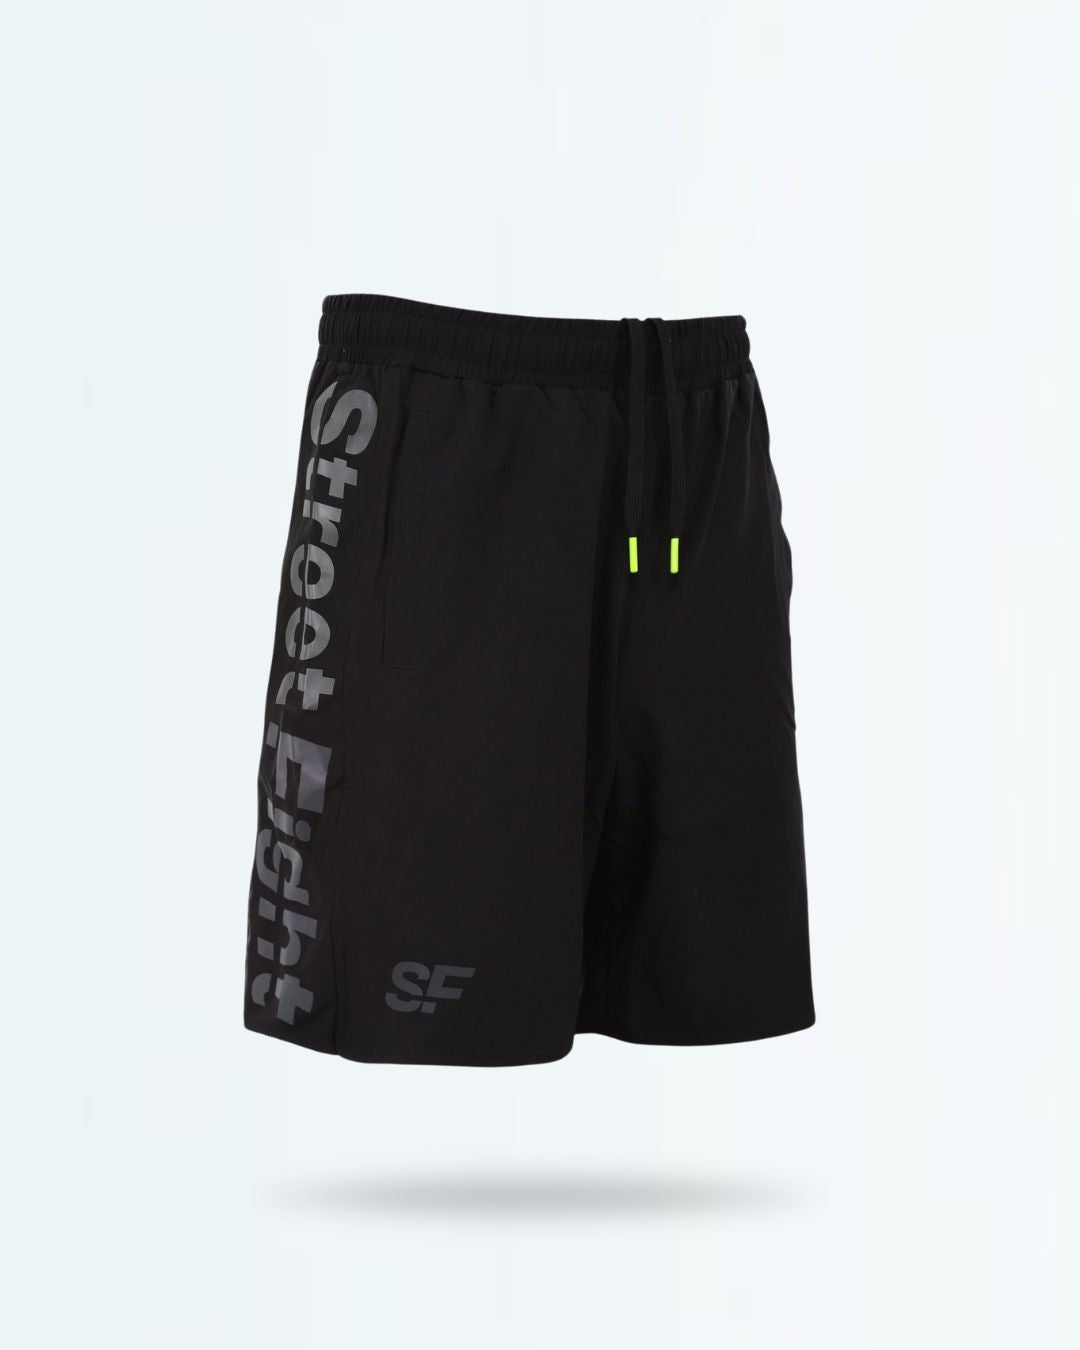 StreetFight Athletic Black short  SFx024